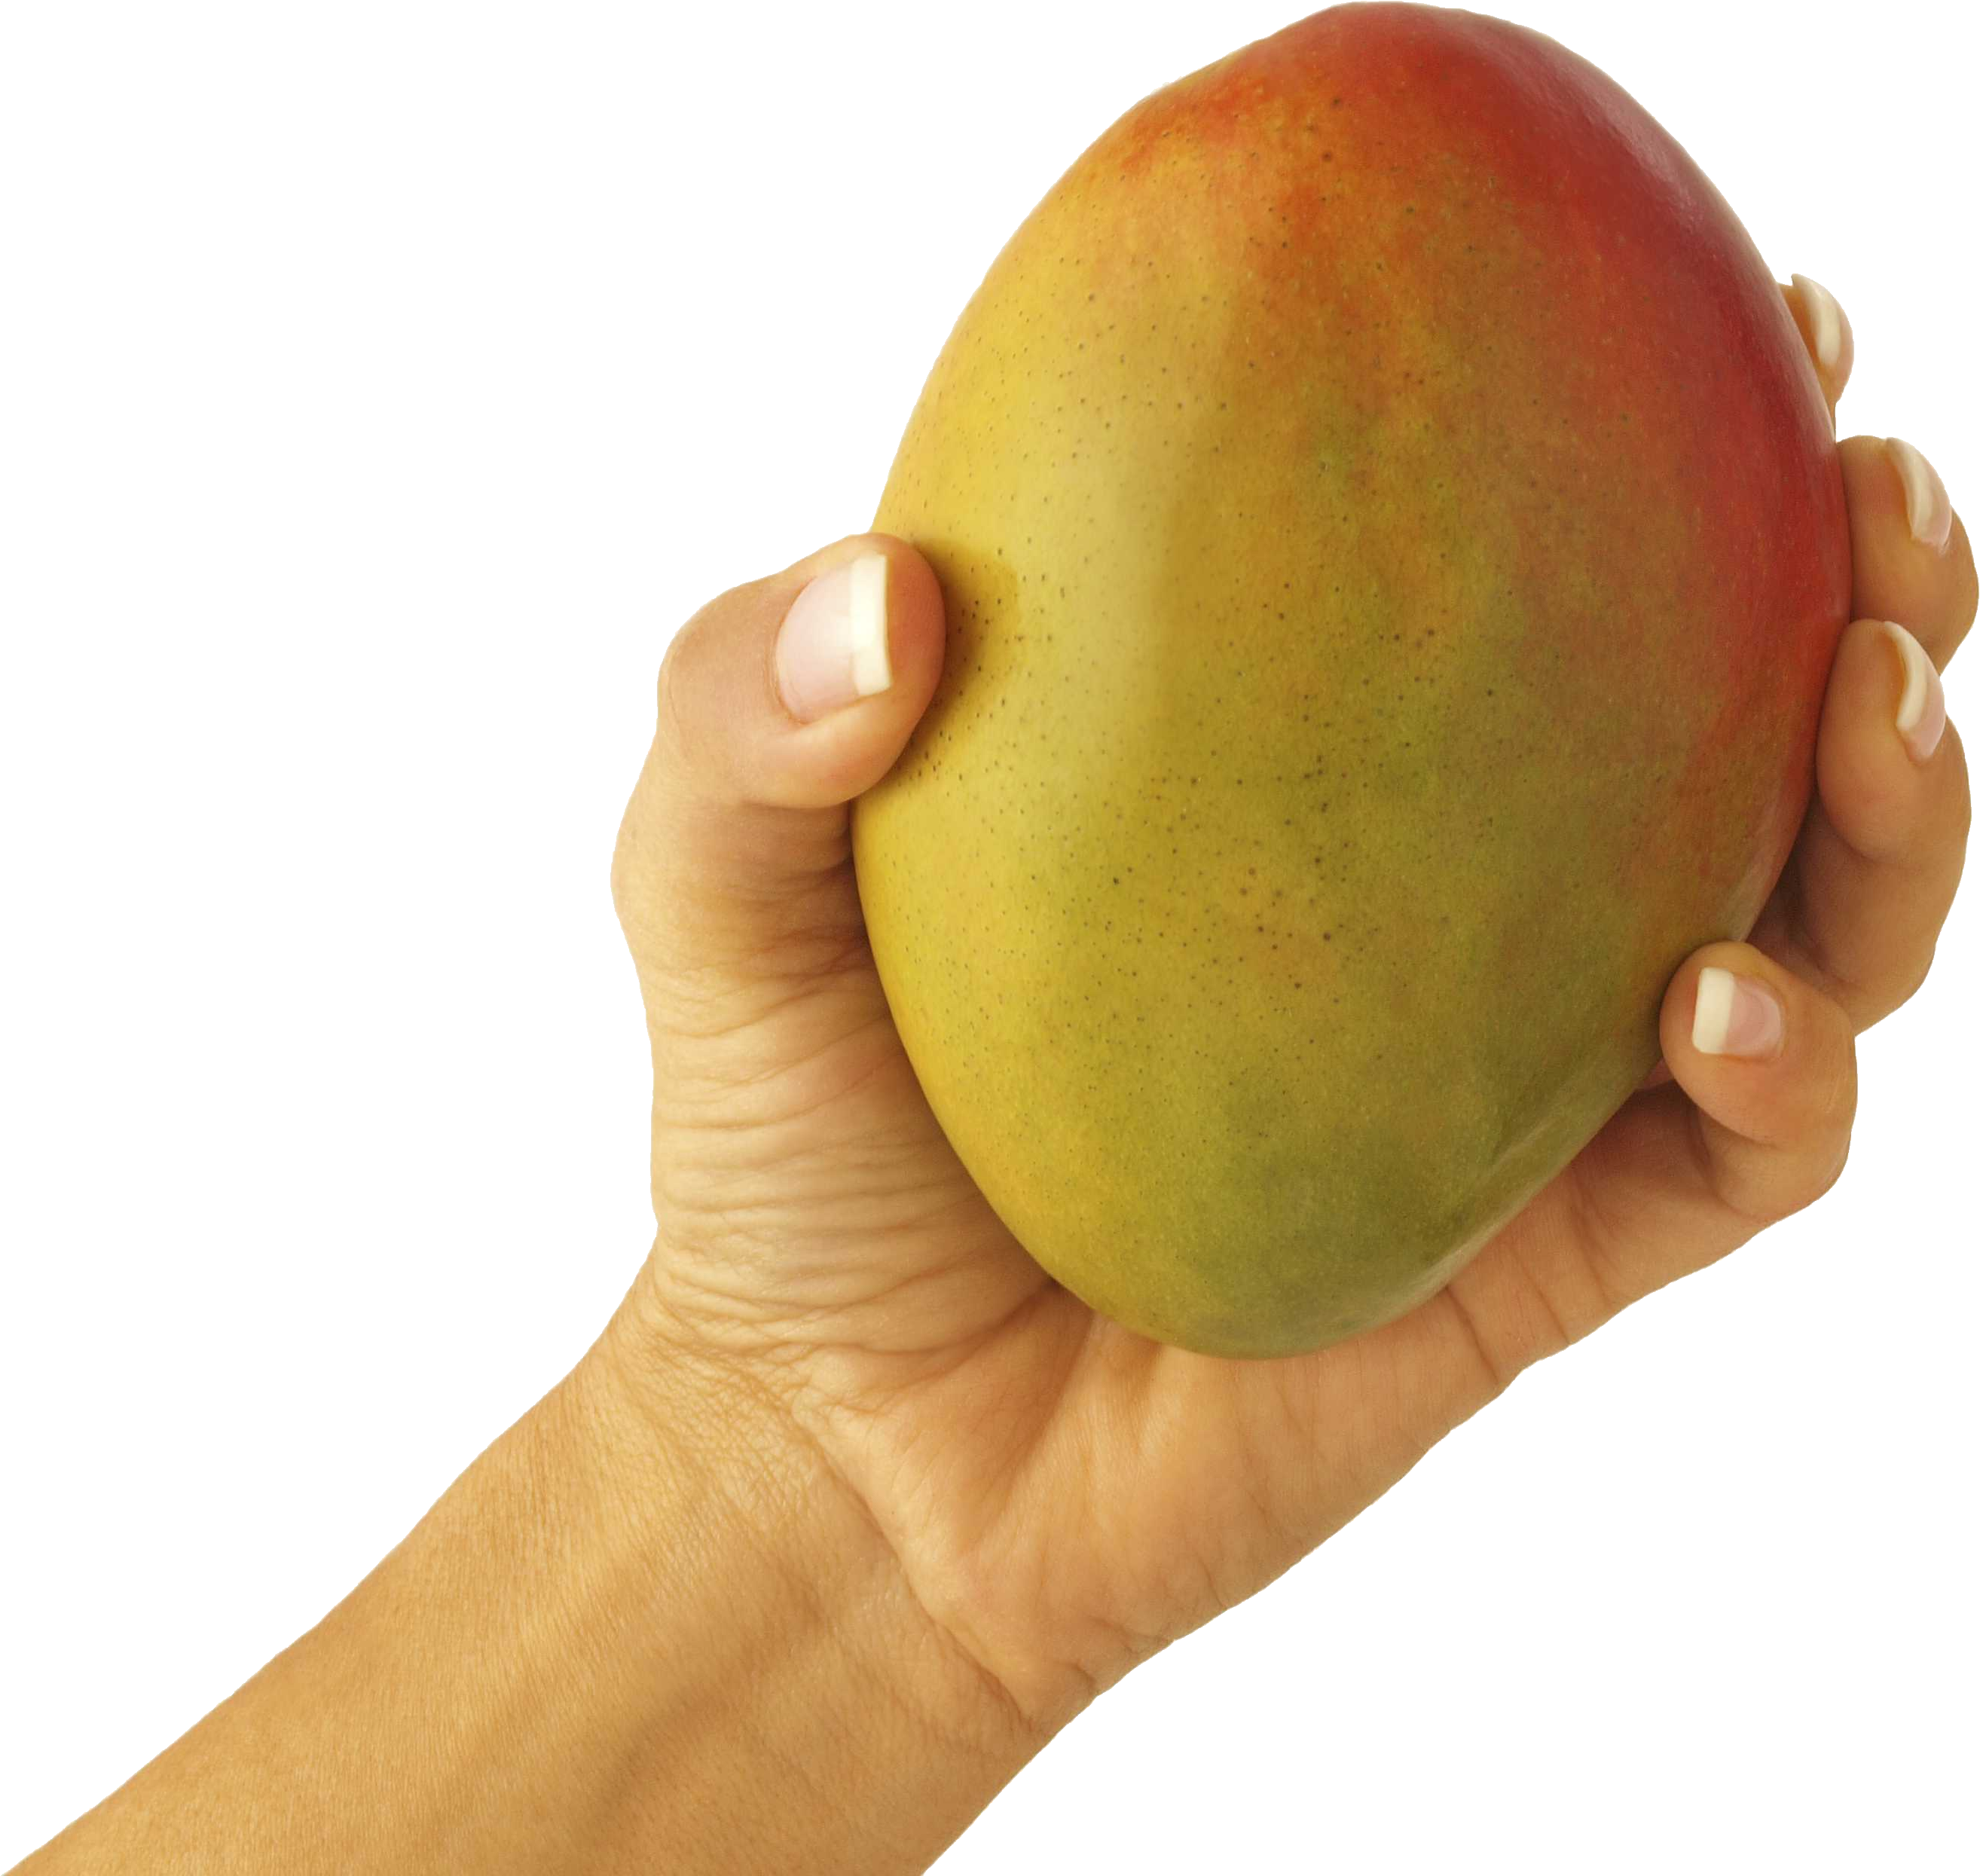 Mango with Hand